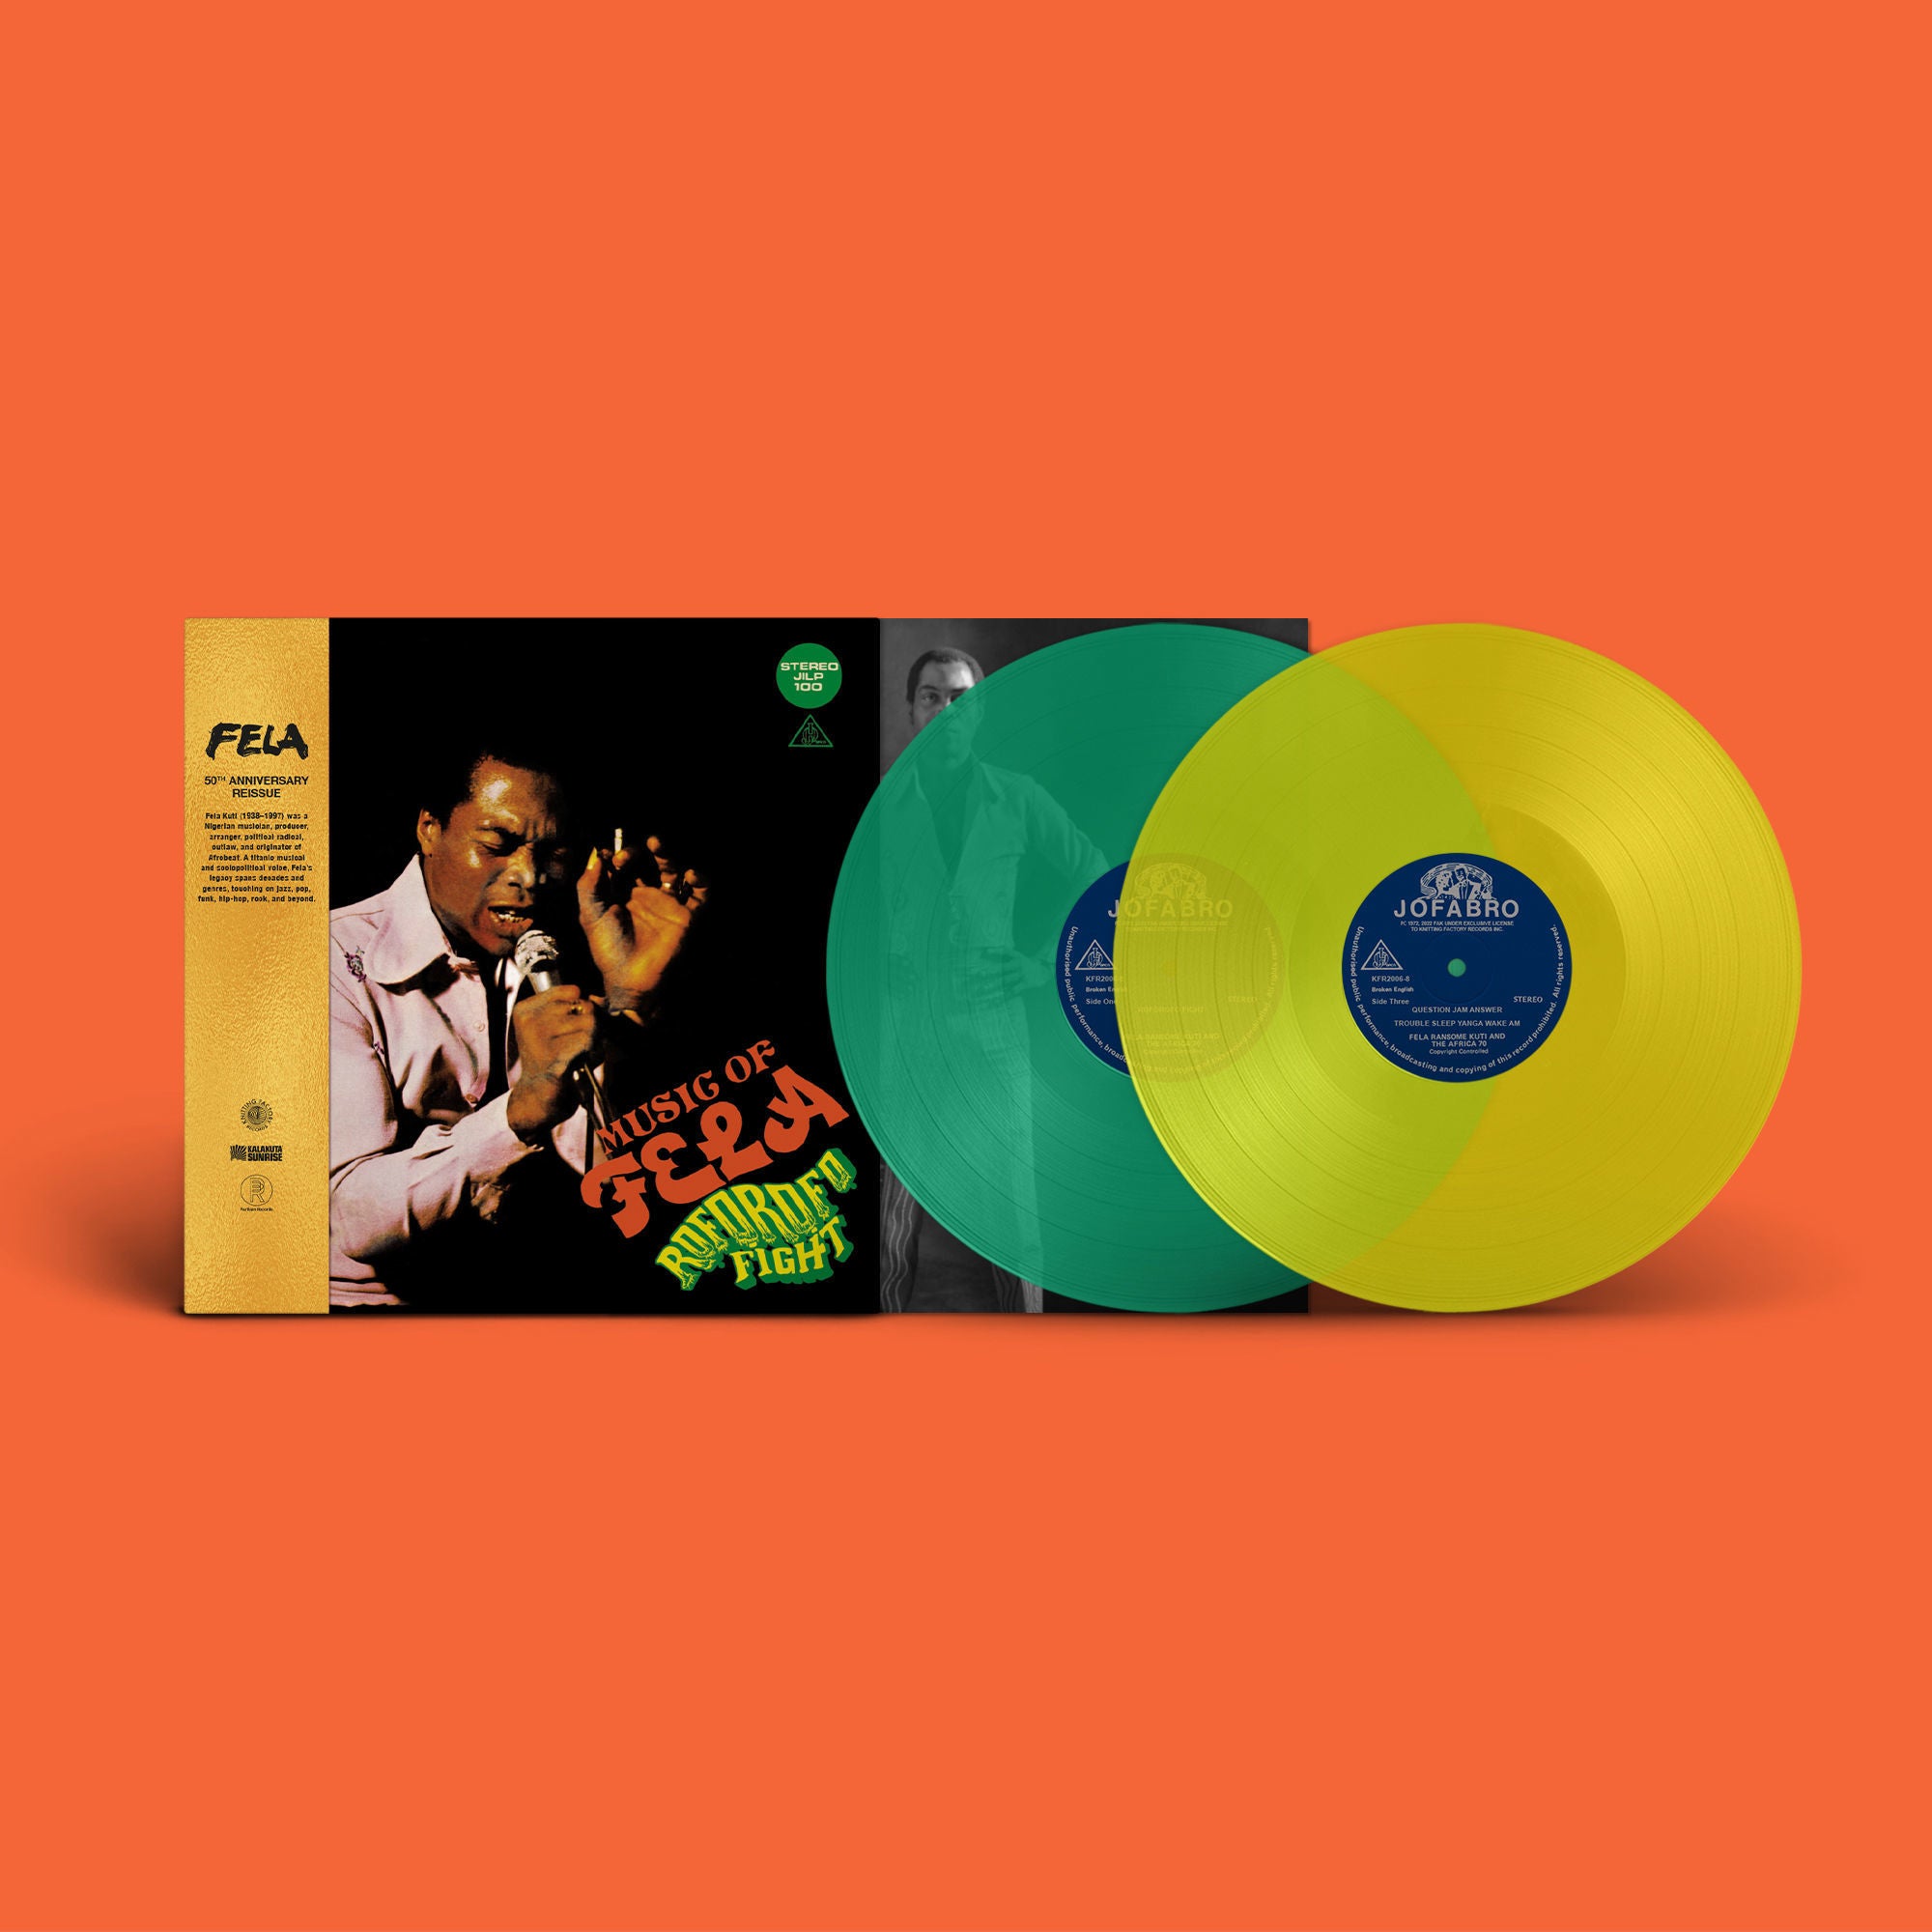 Fela Kuti - Roforofo Fight - 50th Anniversary Edition Yellow & Green Vinyl 2LP